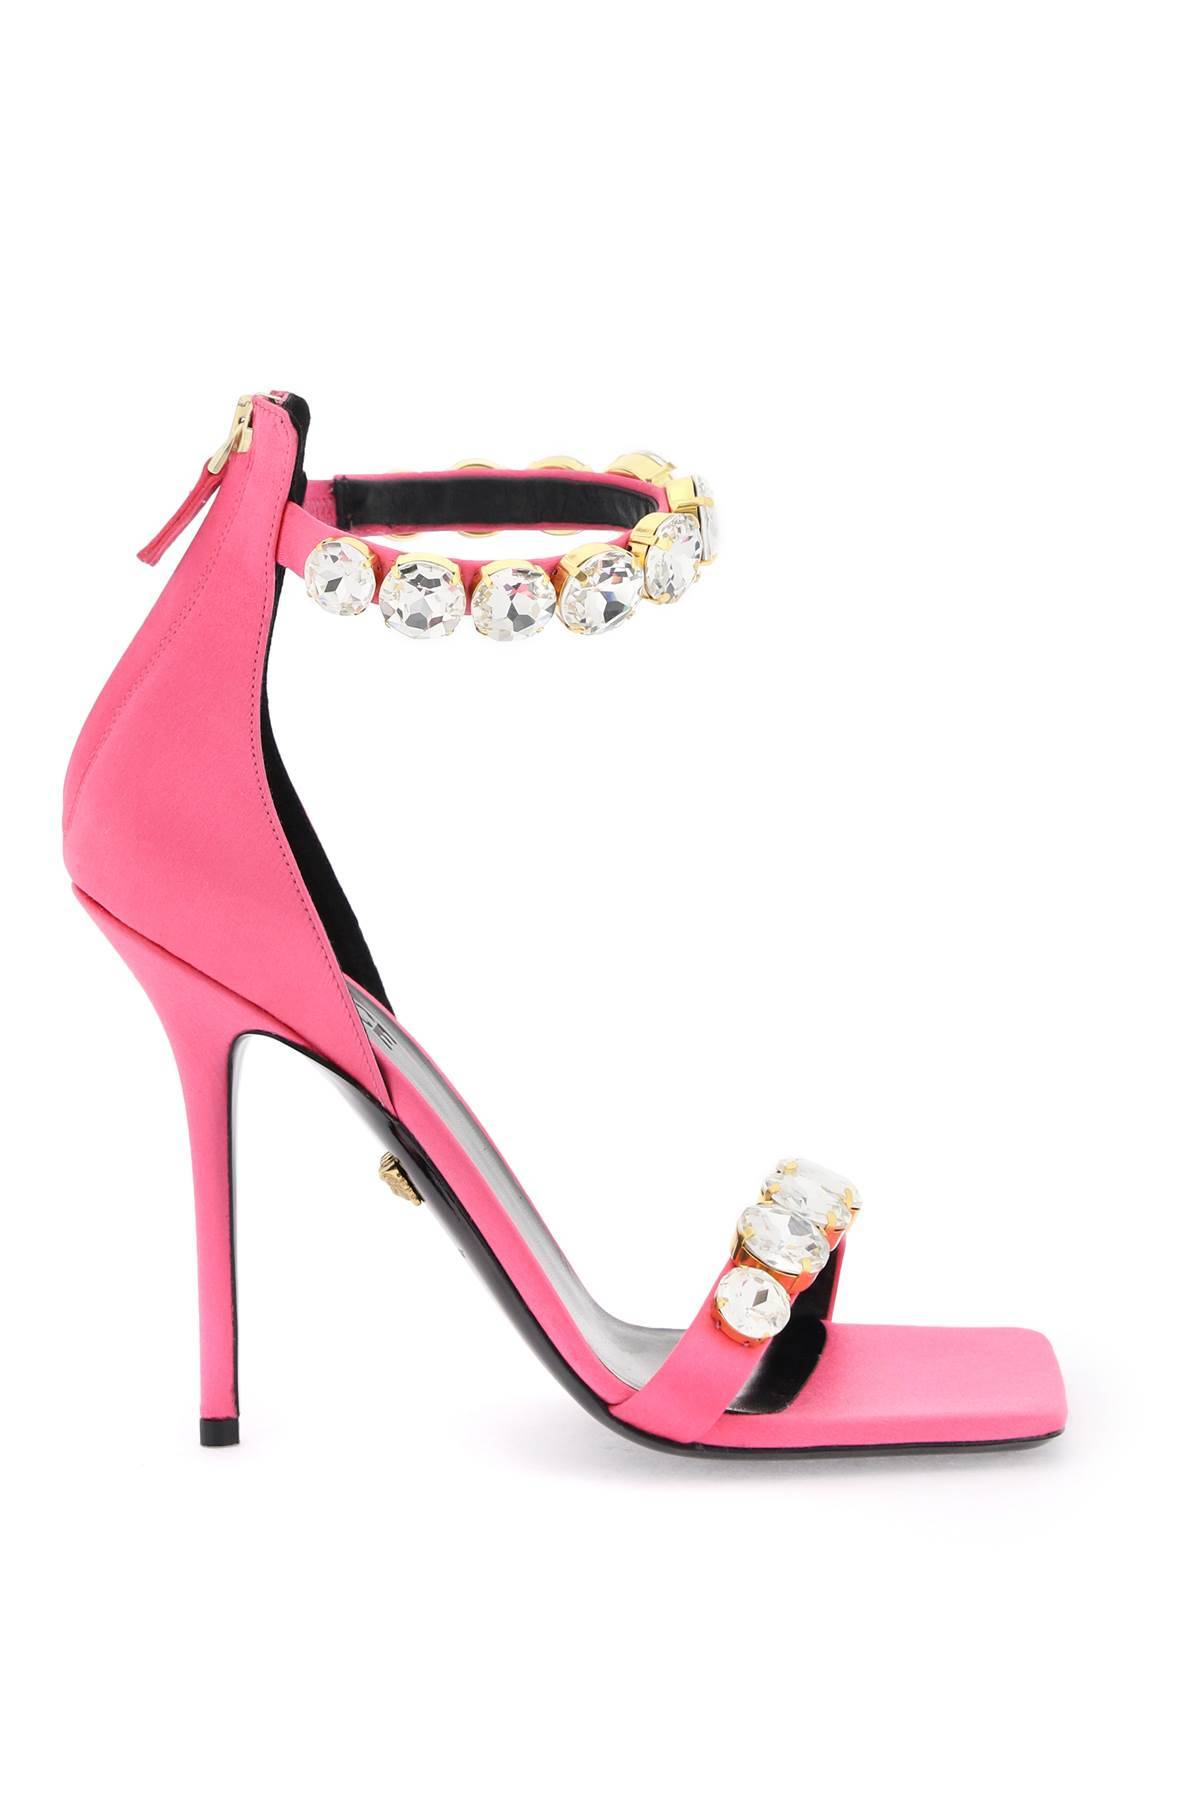 Versace VERSACE satin sandals with crystals